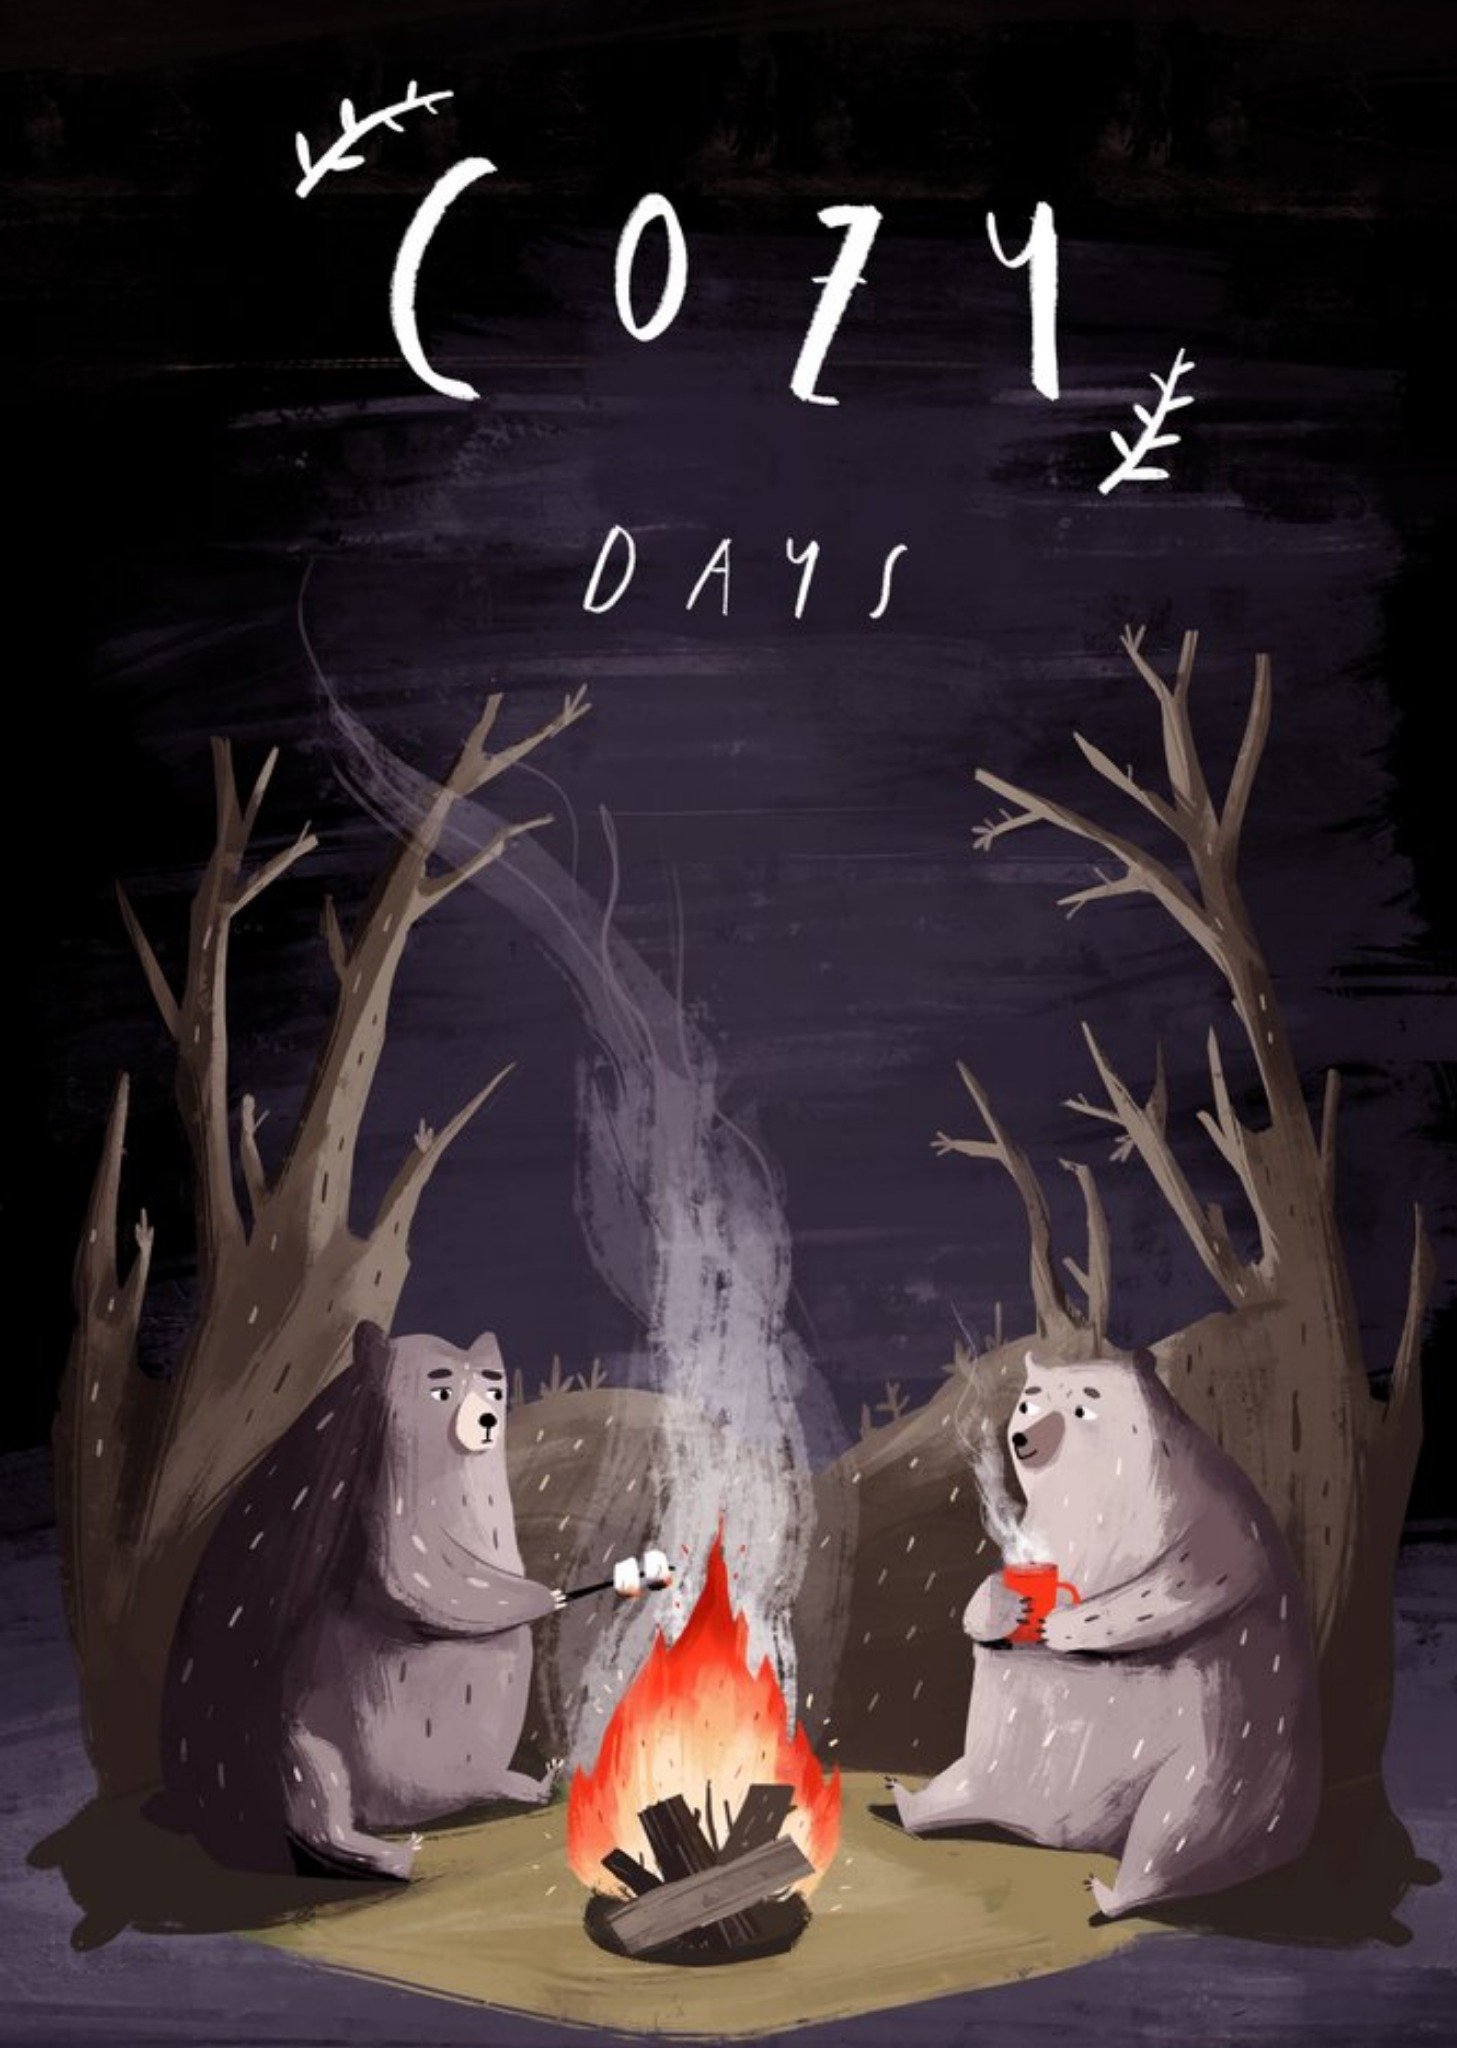 Moonpig Bears Around The Campfire Cozy Date Card Ecard